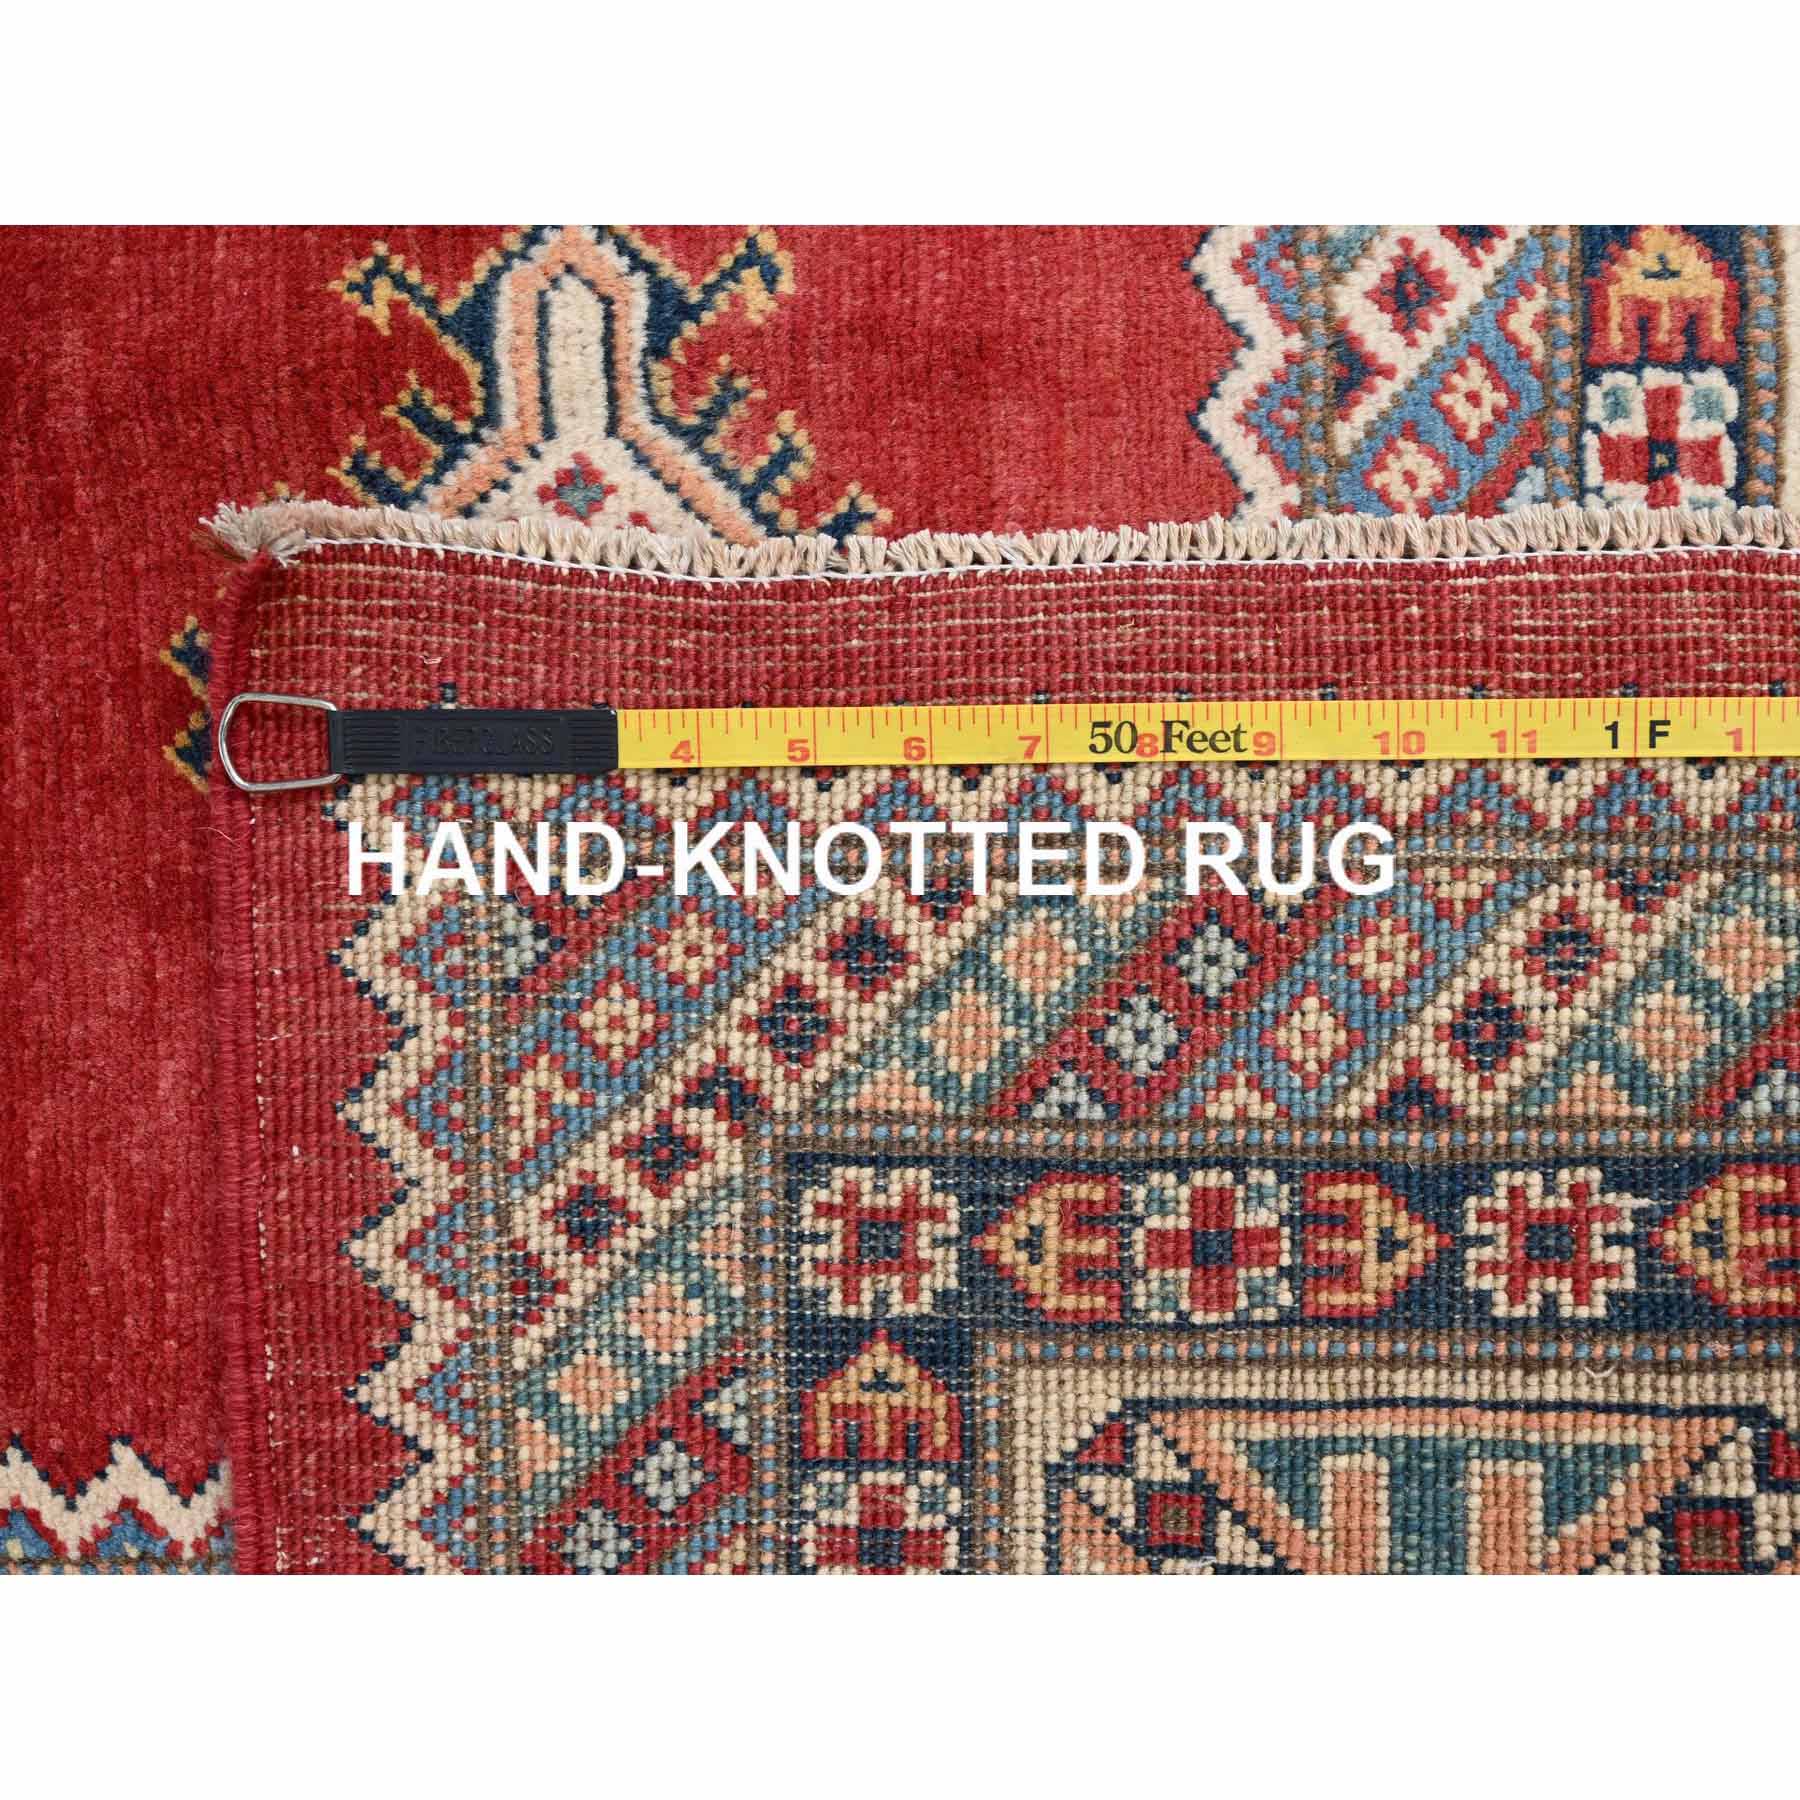 Kazak-Hand-Knotted-Rug-432355